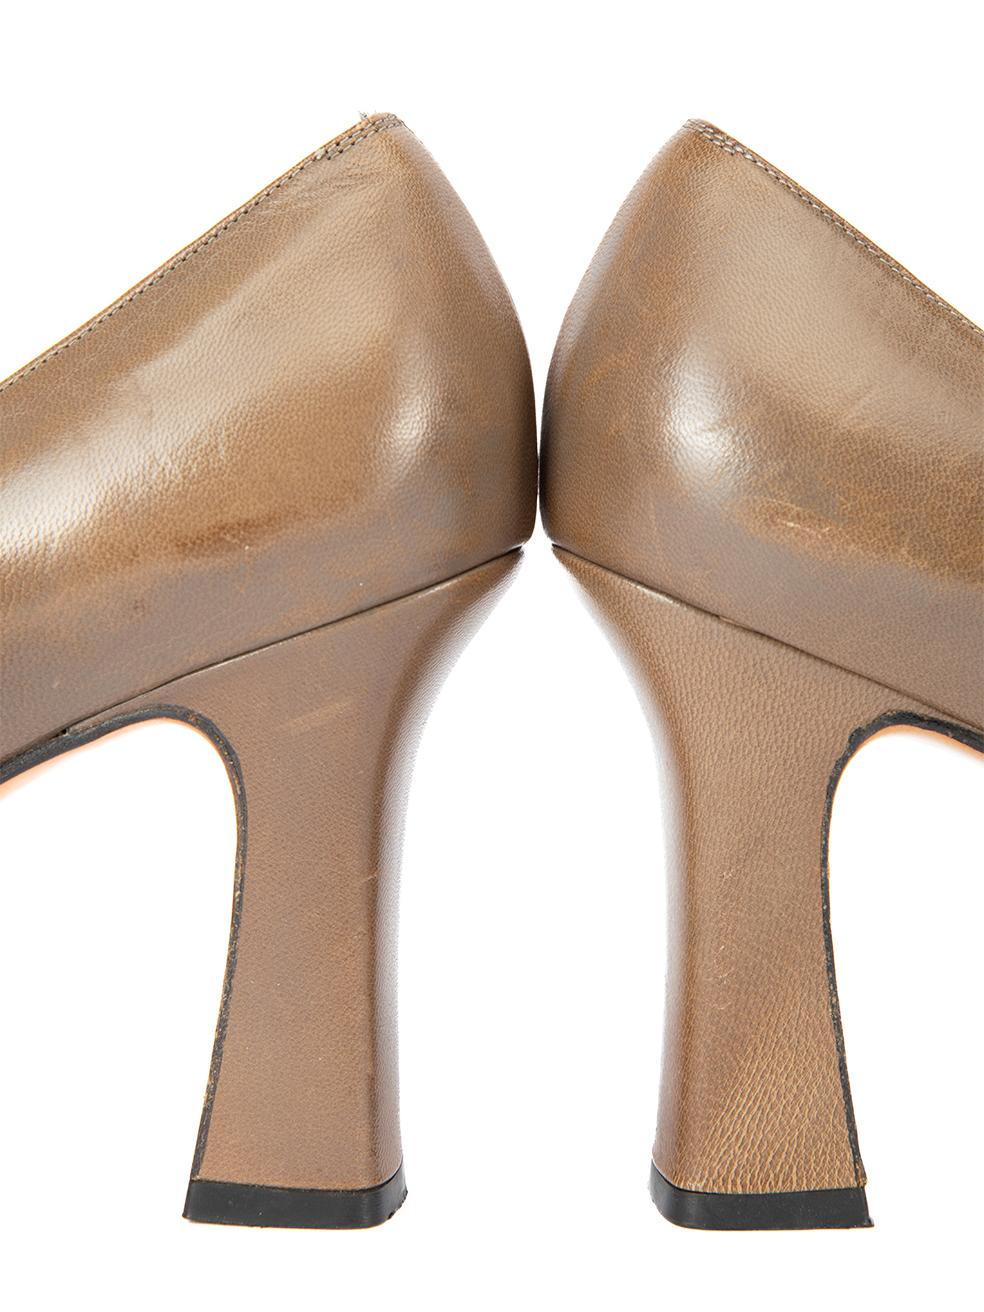 Salvatore Ferragamo Women's Brown Leather Pointed Toe Cap Pumps For Sale 3